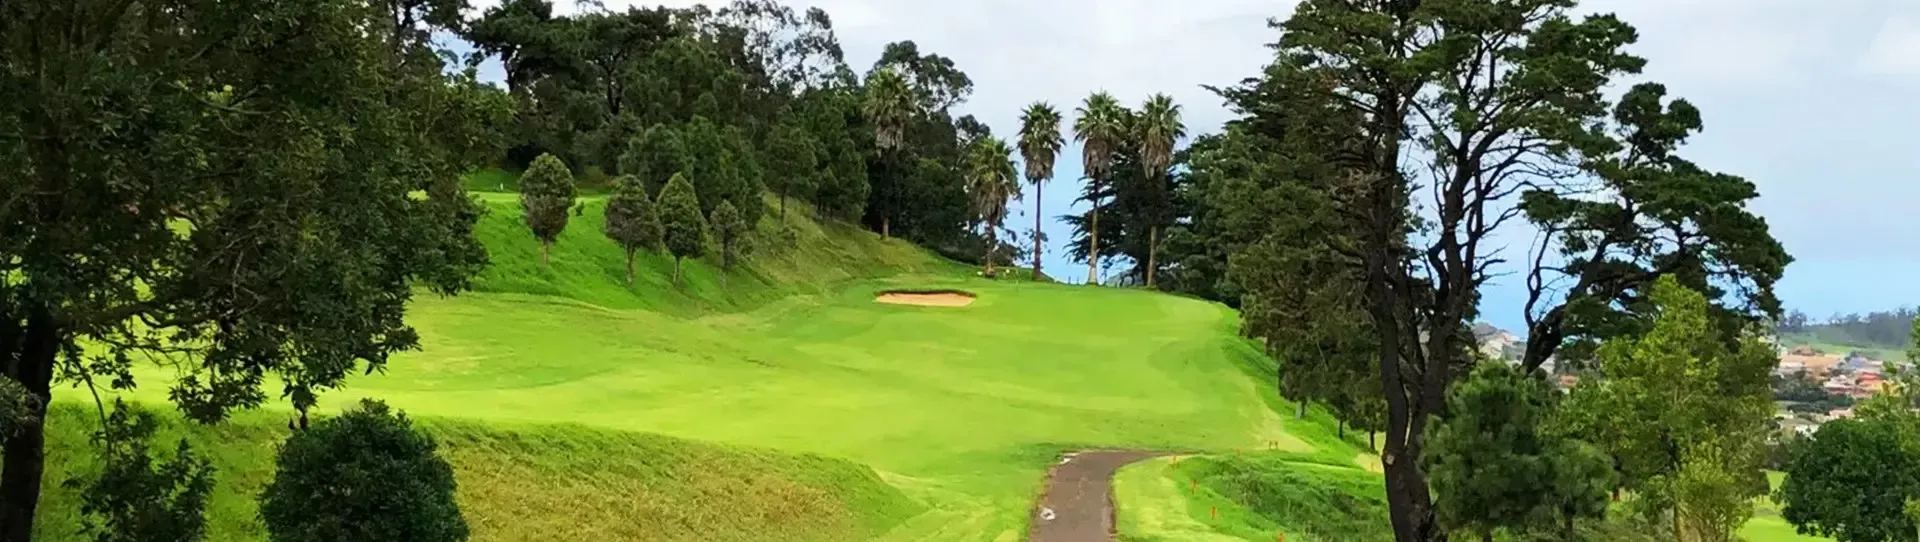 Spain golf courses - Real Club de Golf Tenerife - Photo 3